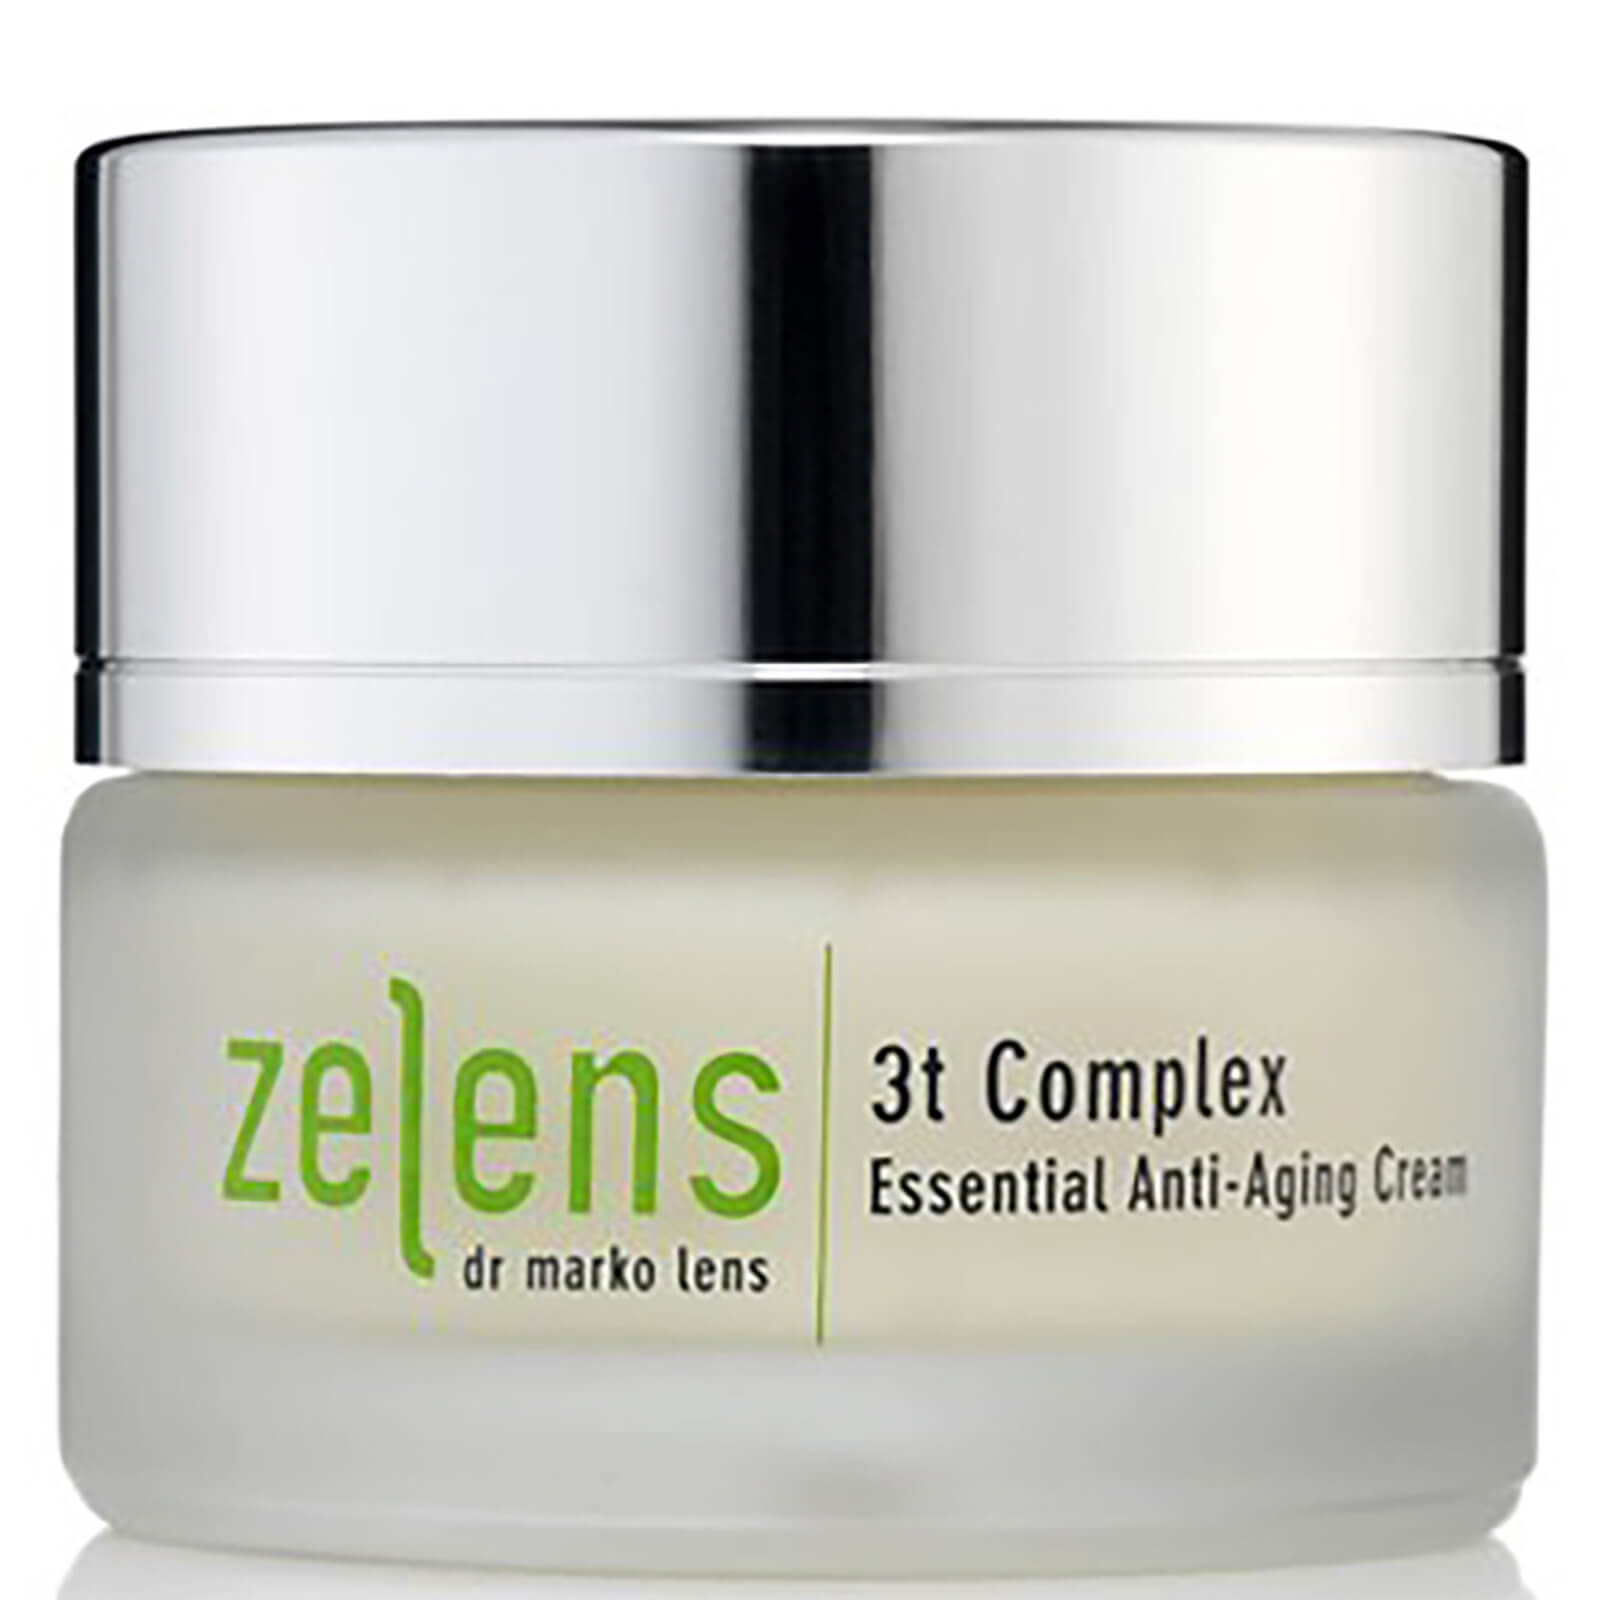 Crema Antienvejecimiento Zelens 3T Complex Essential